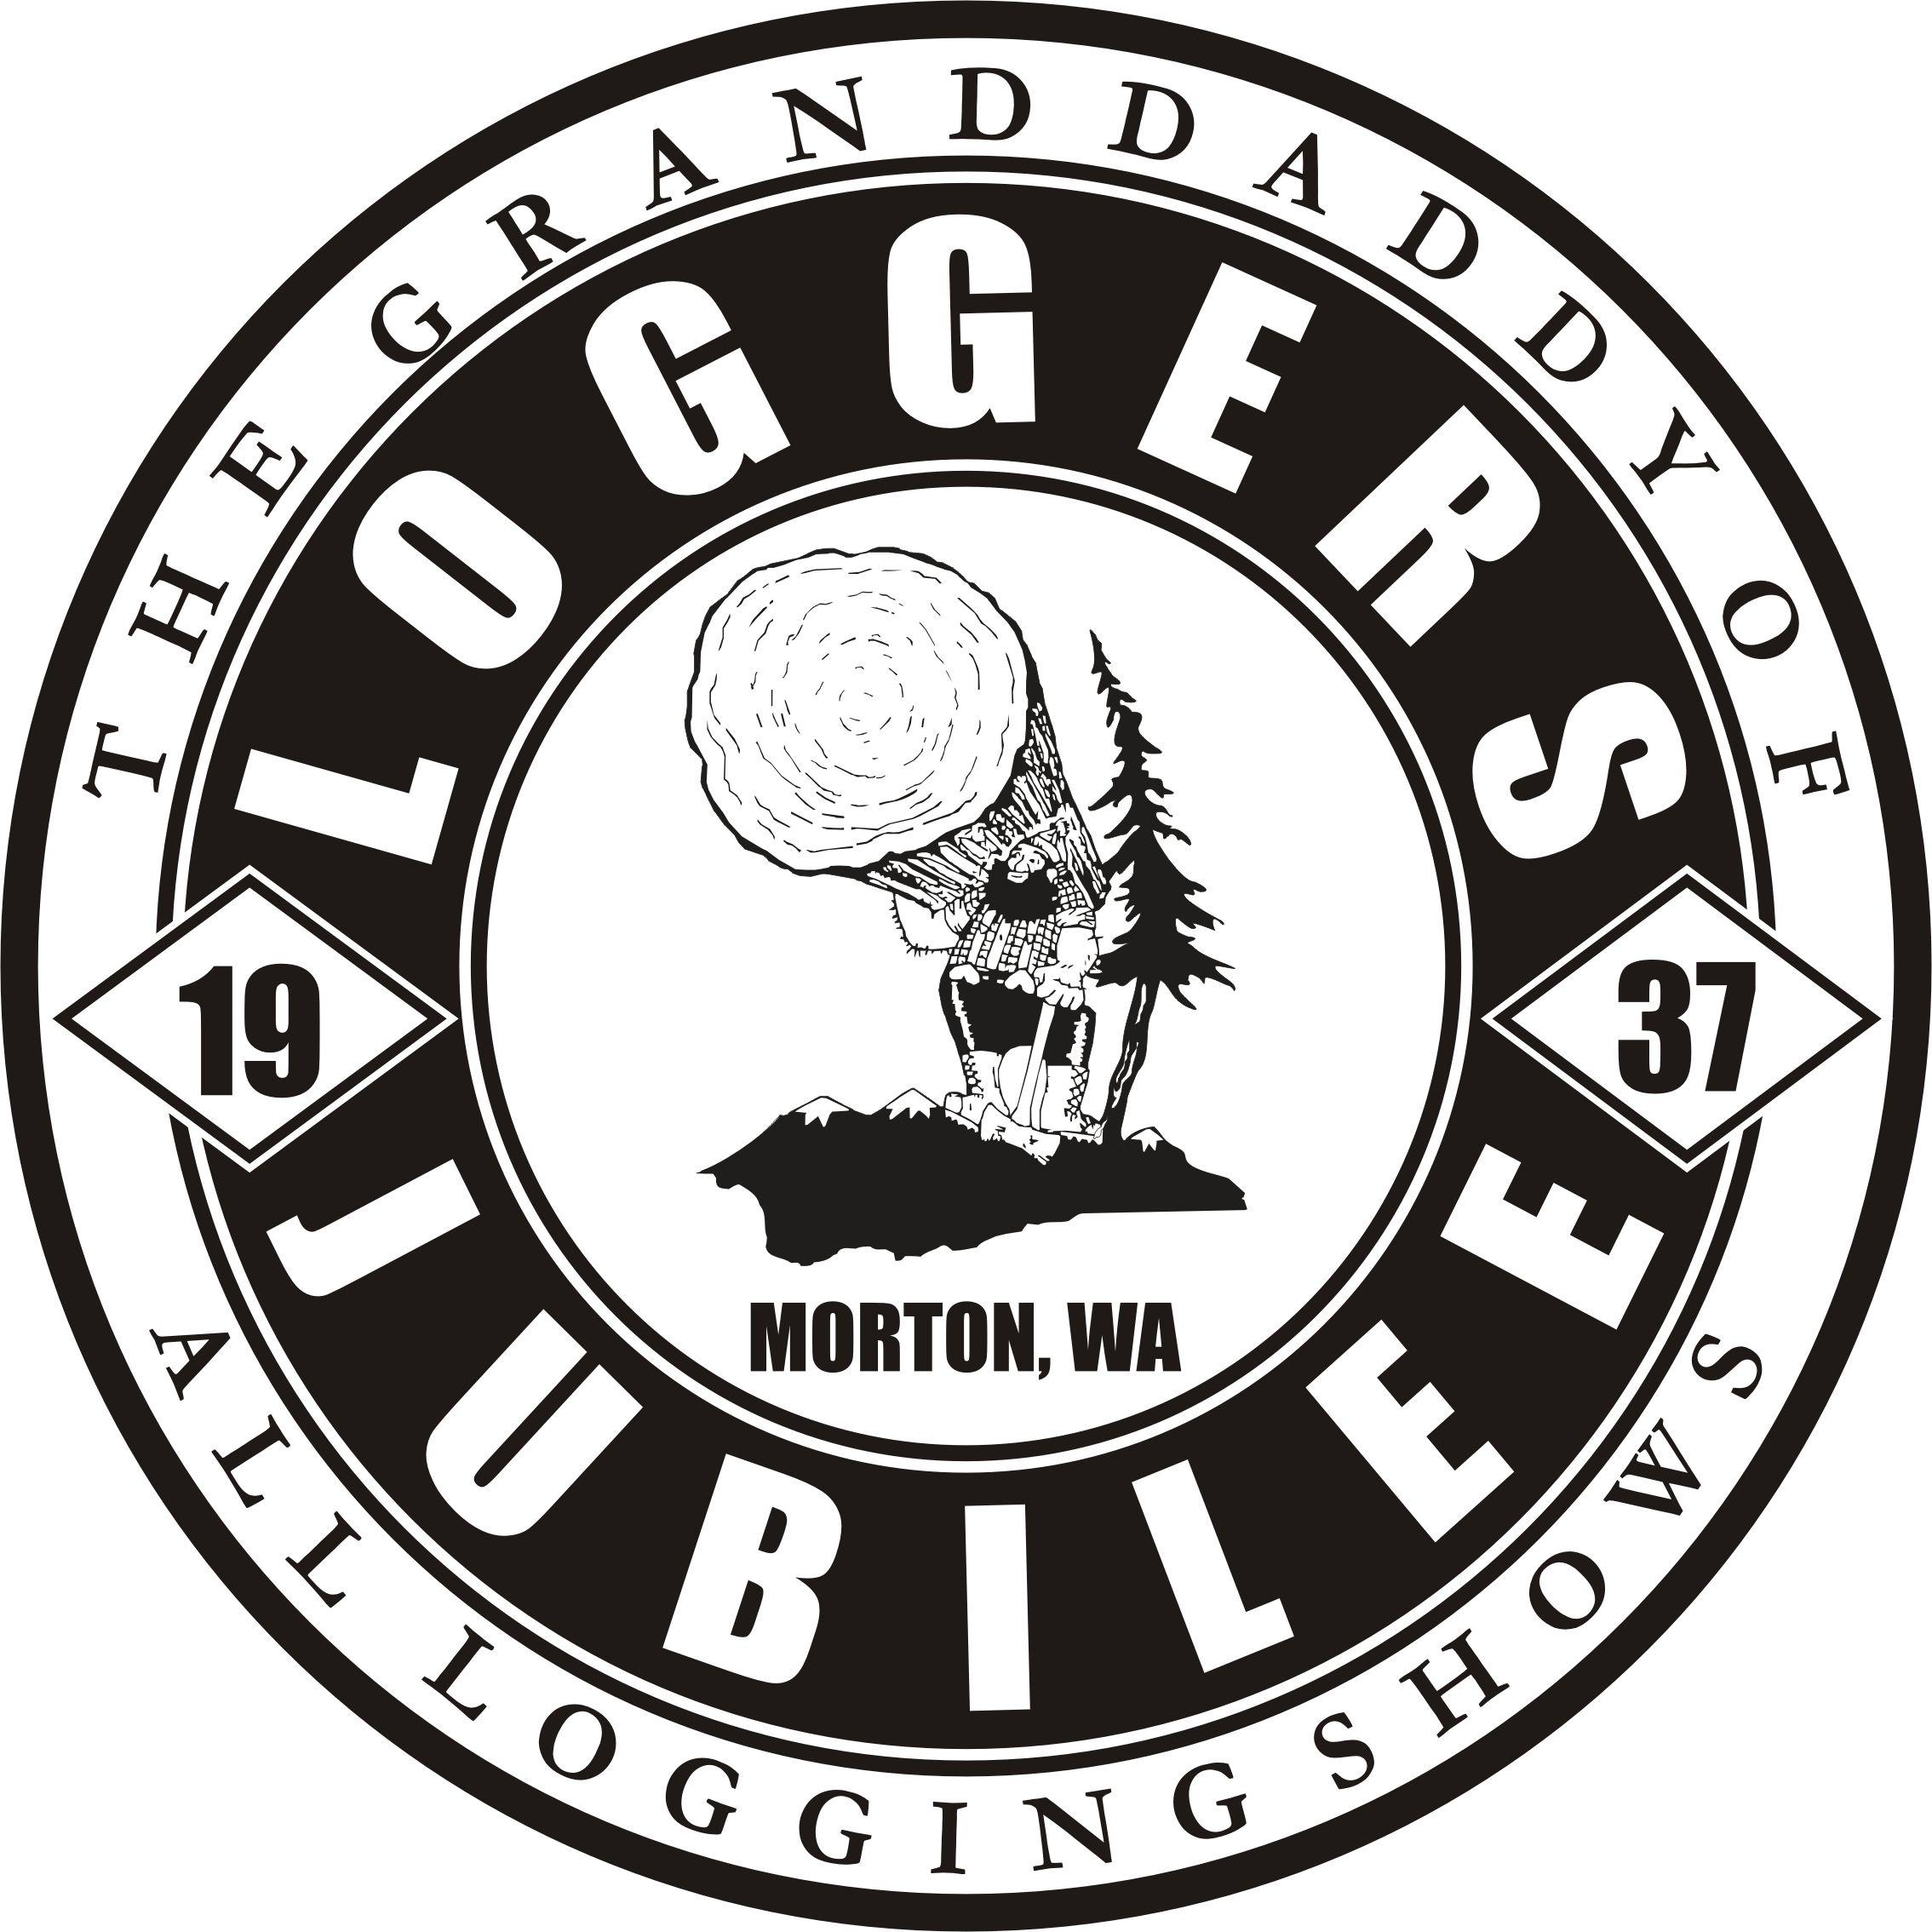 Loggers Logo - Morton Loggers Jubilee Granddaddy of all Logging Shows